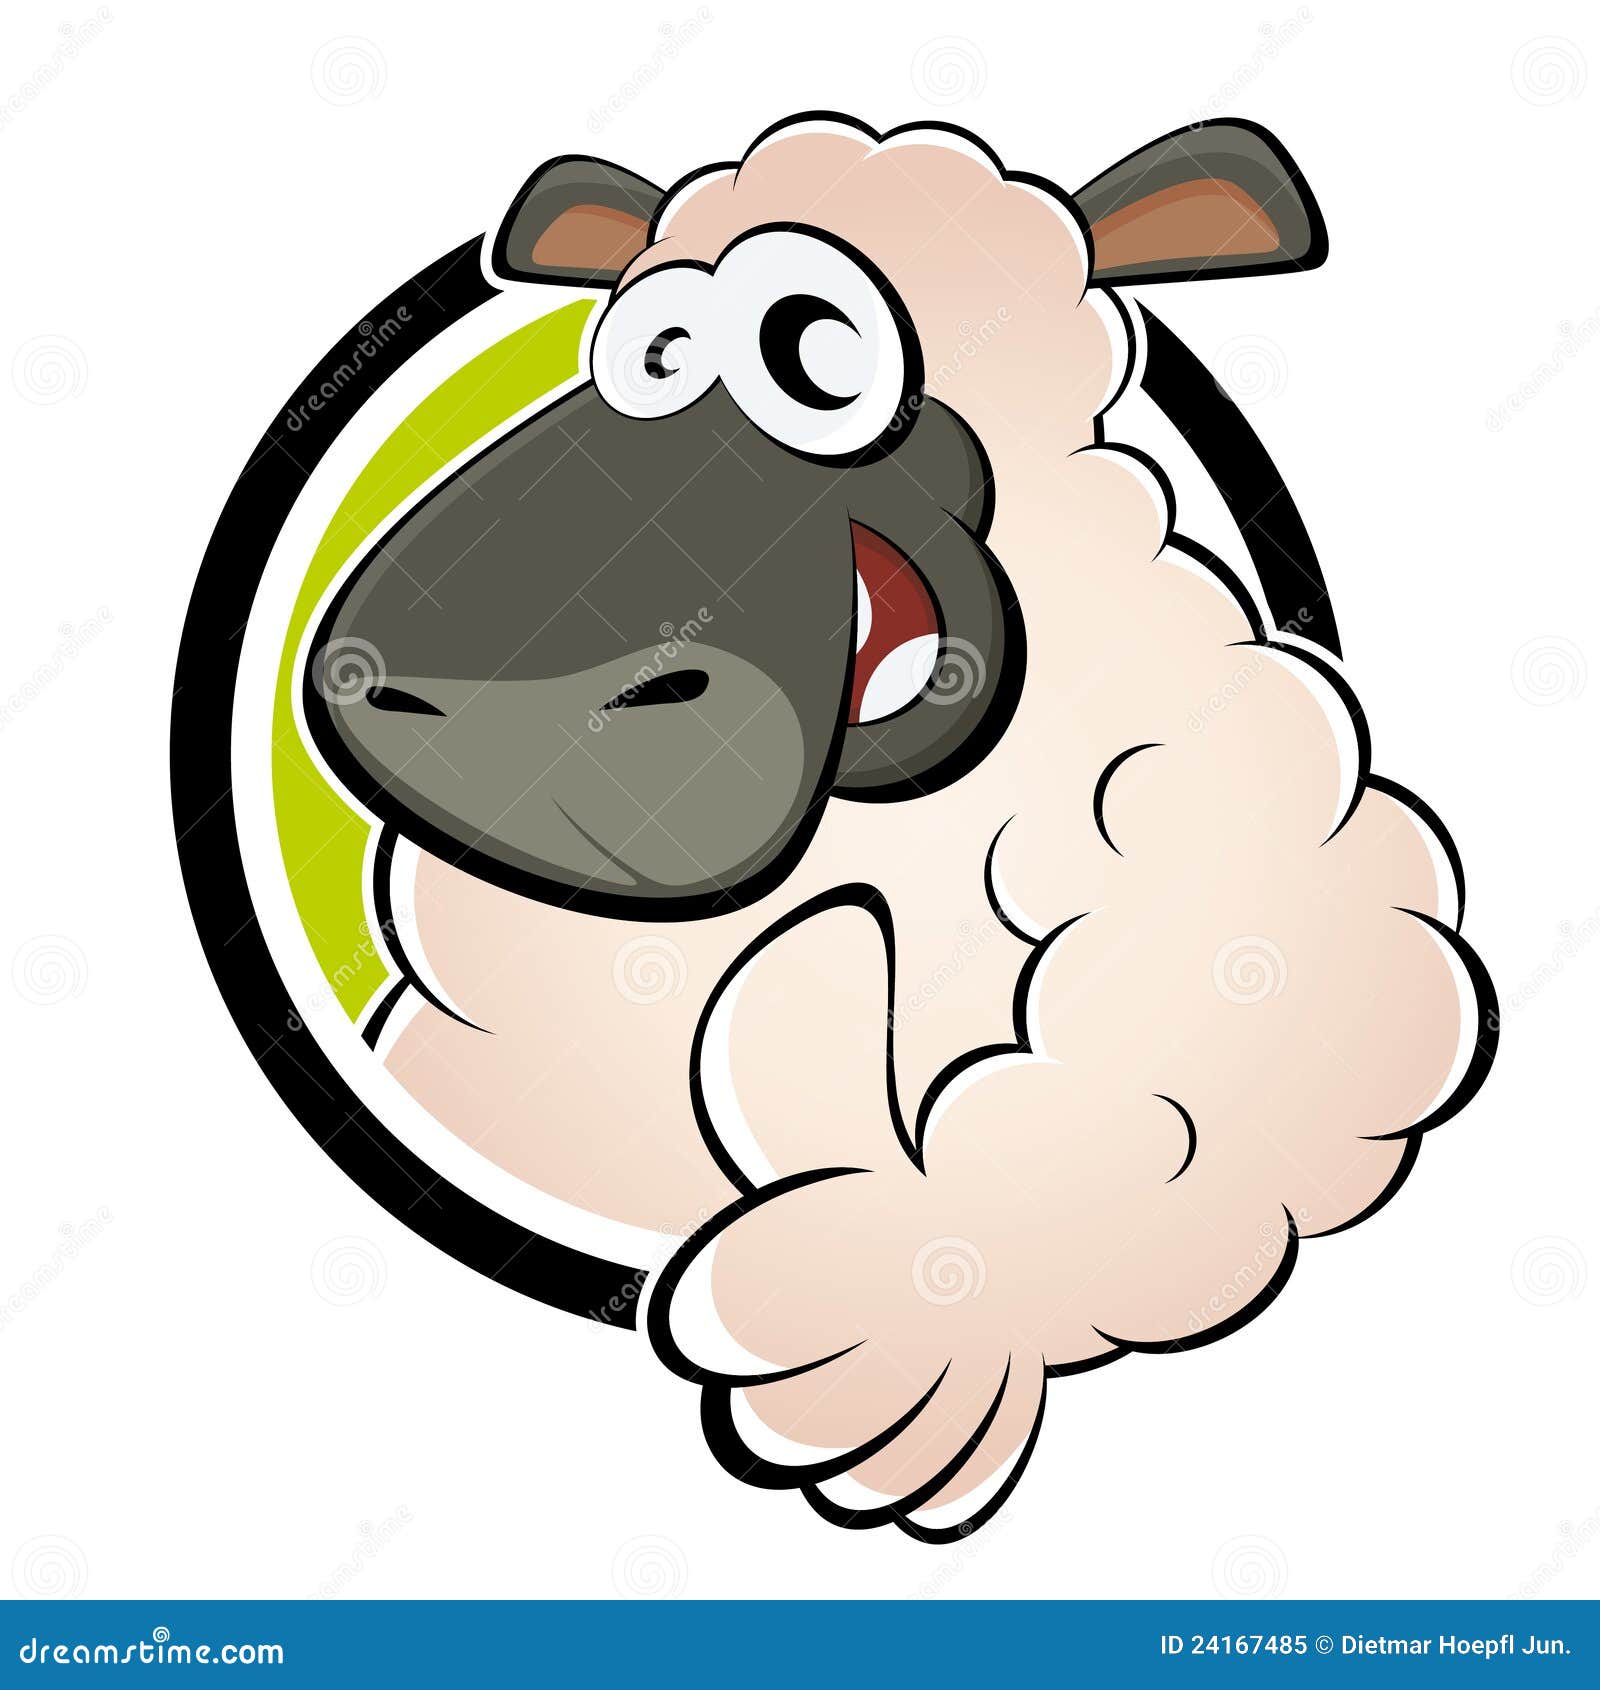 funny-cartoon-sheep-24167485.jpg